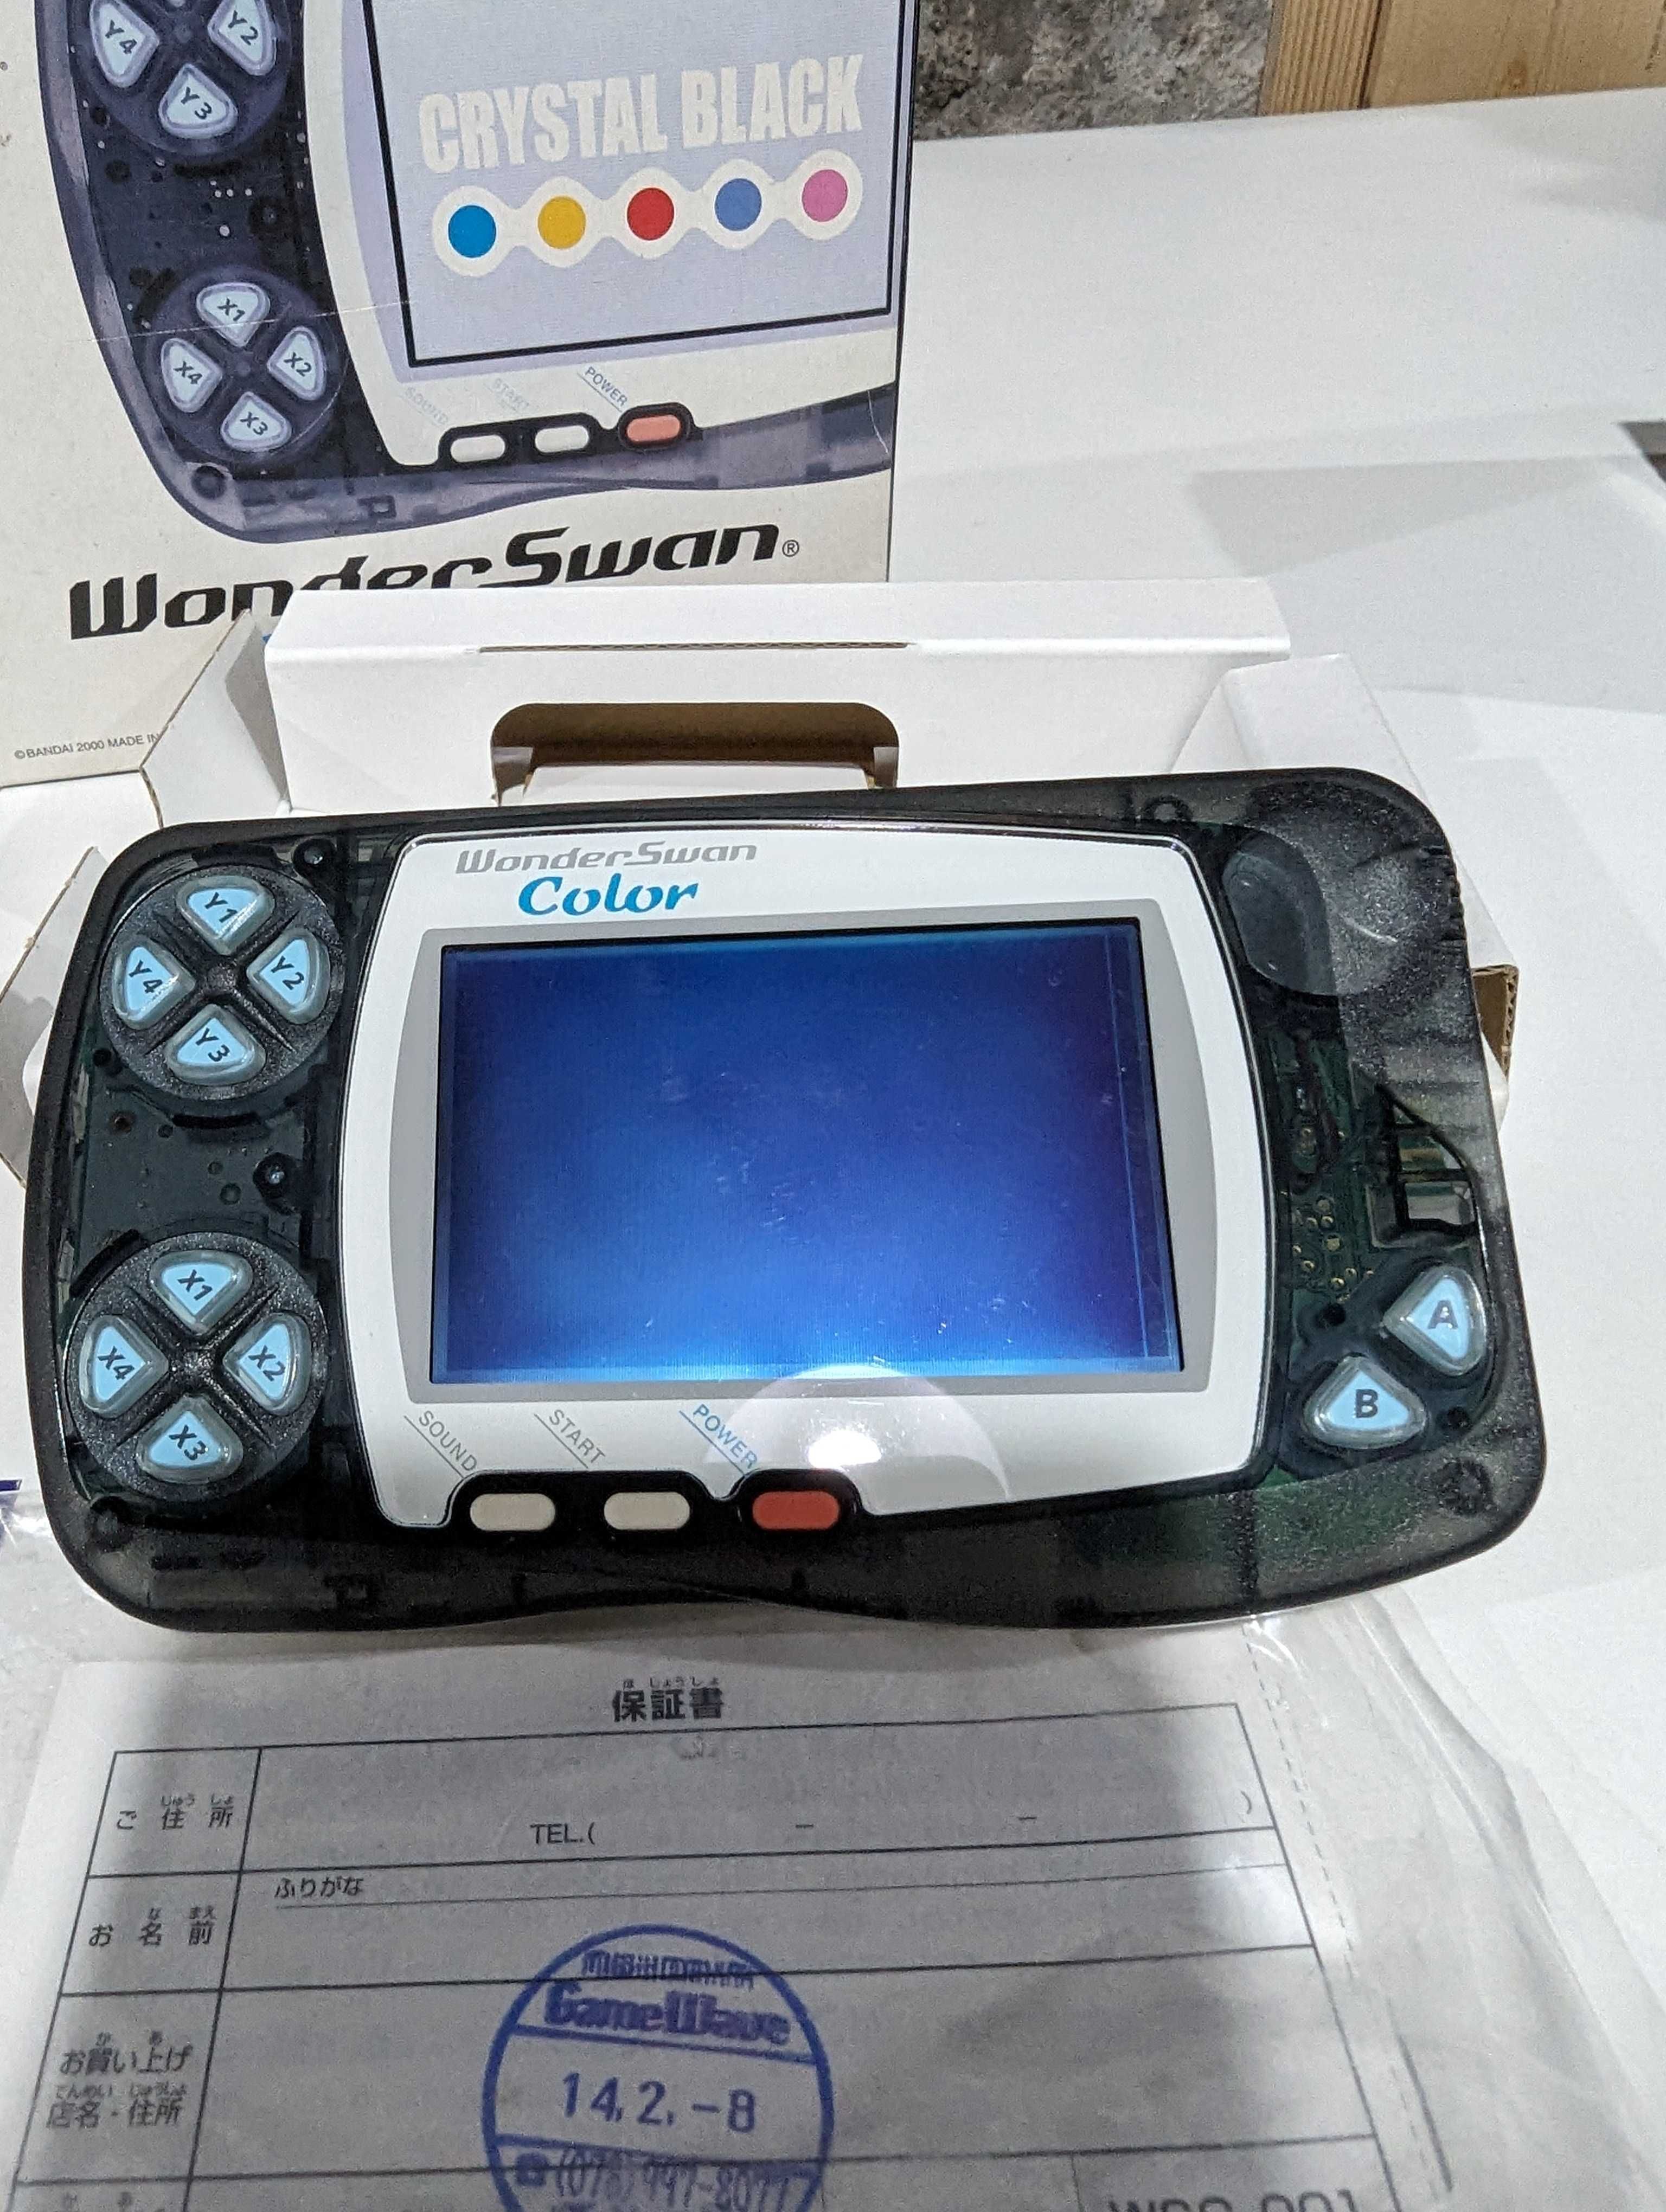 Consola BANDAI WonderSwan Color completa na caixa